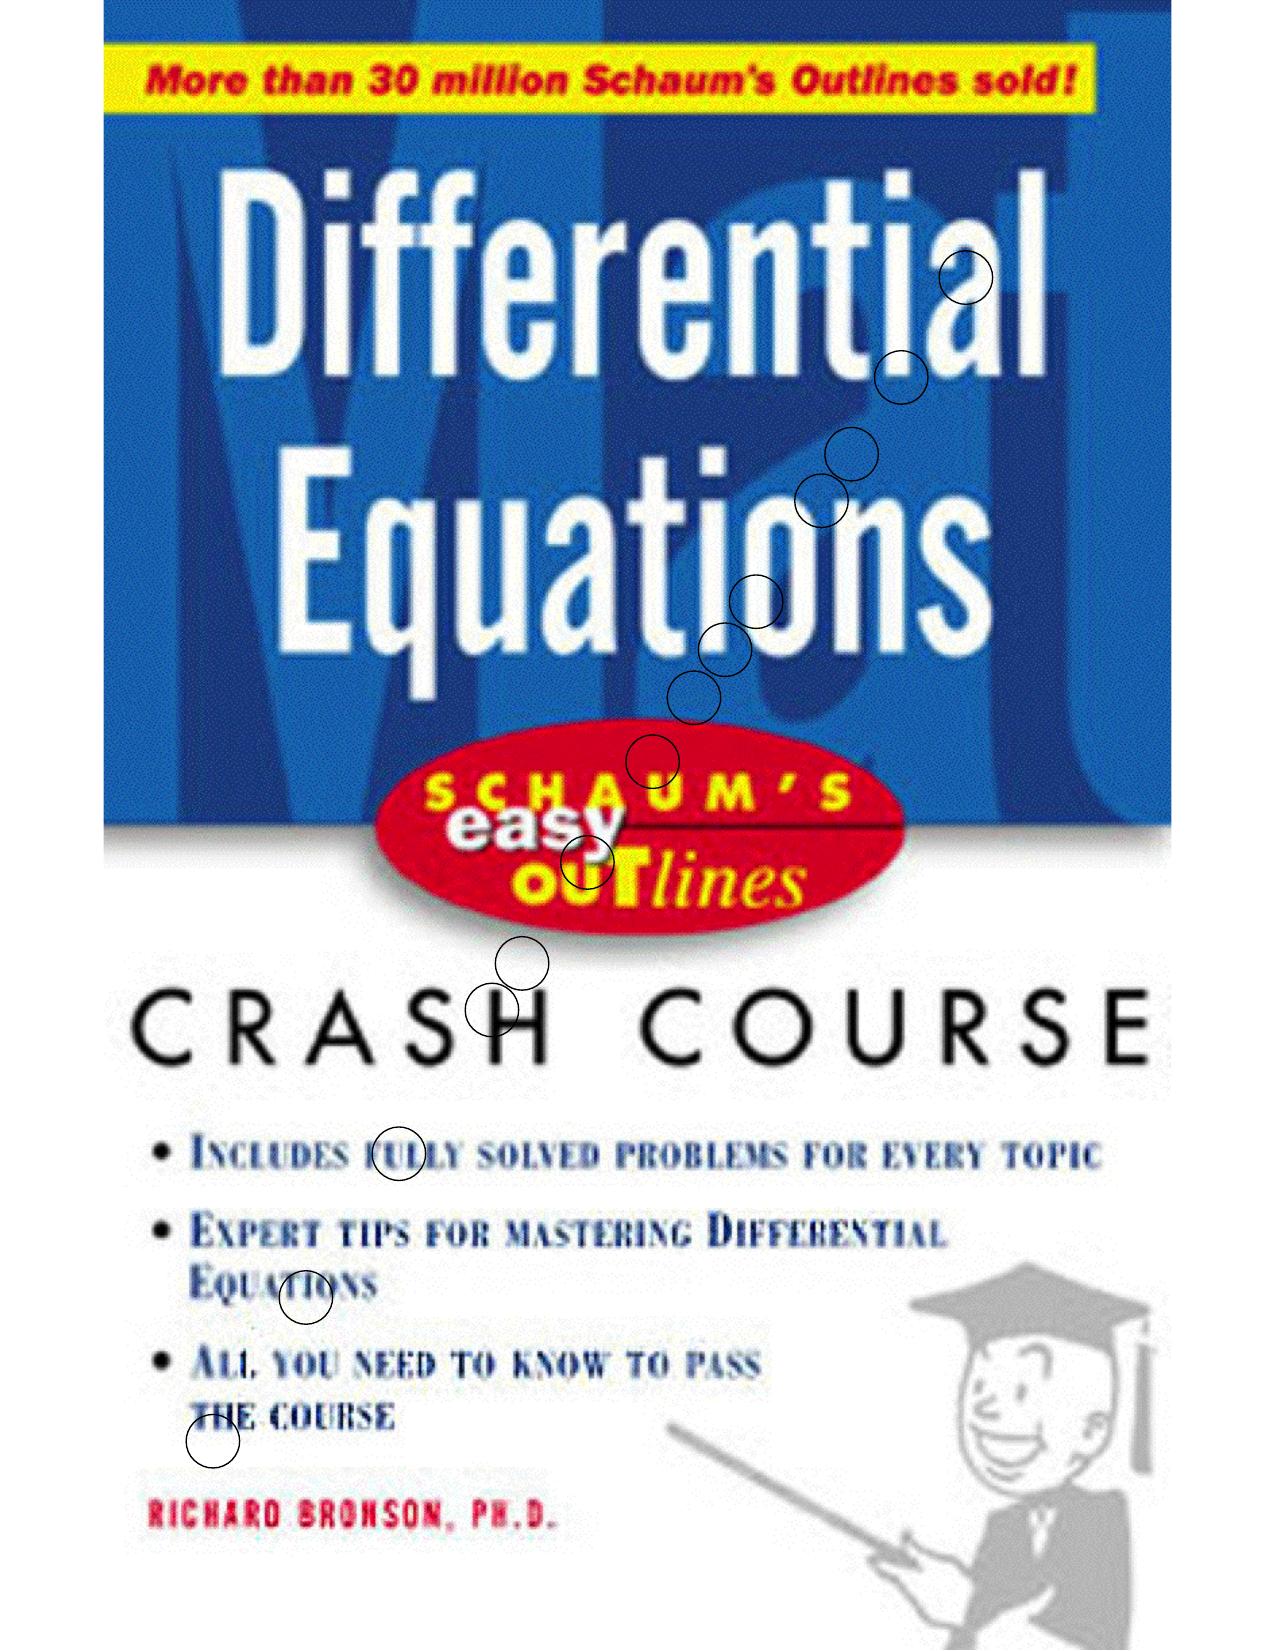 Schaum's Easy Outlines - Differential Equations Crash Course.pdf